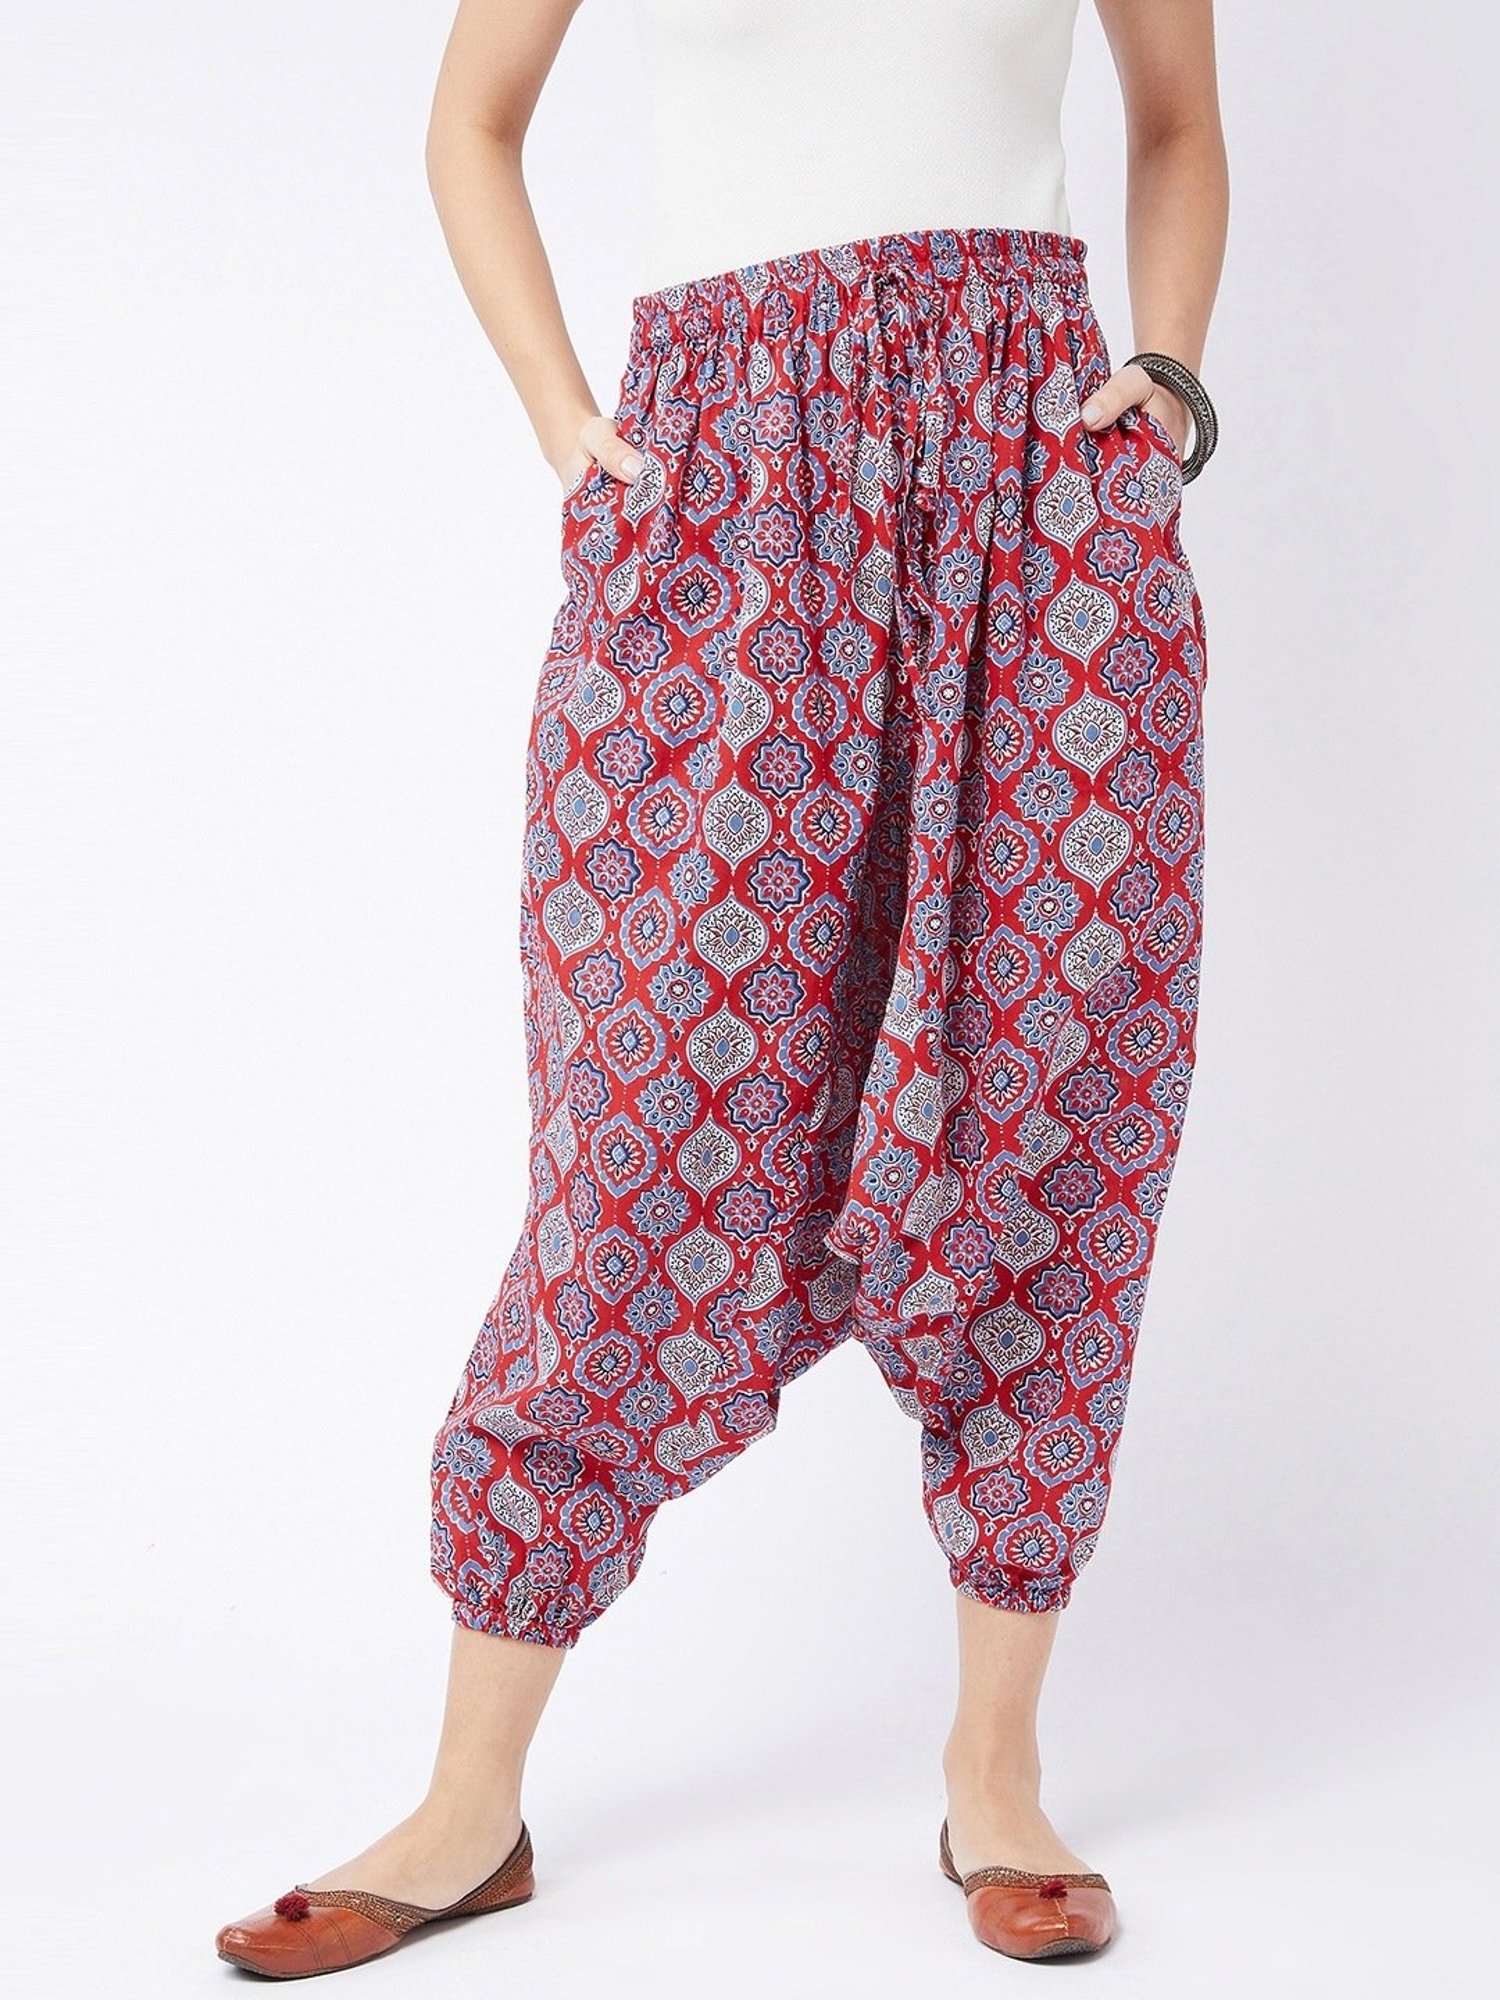 Tribe Azure 100 Cotton Harem Pants Colorful Summer Hippie Yoga Boho Casual  Fashion Women Small  Amazonin Clothing  Accessories